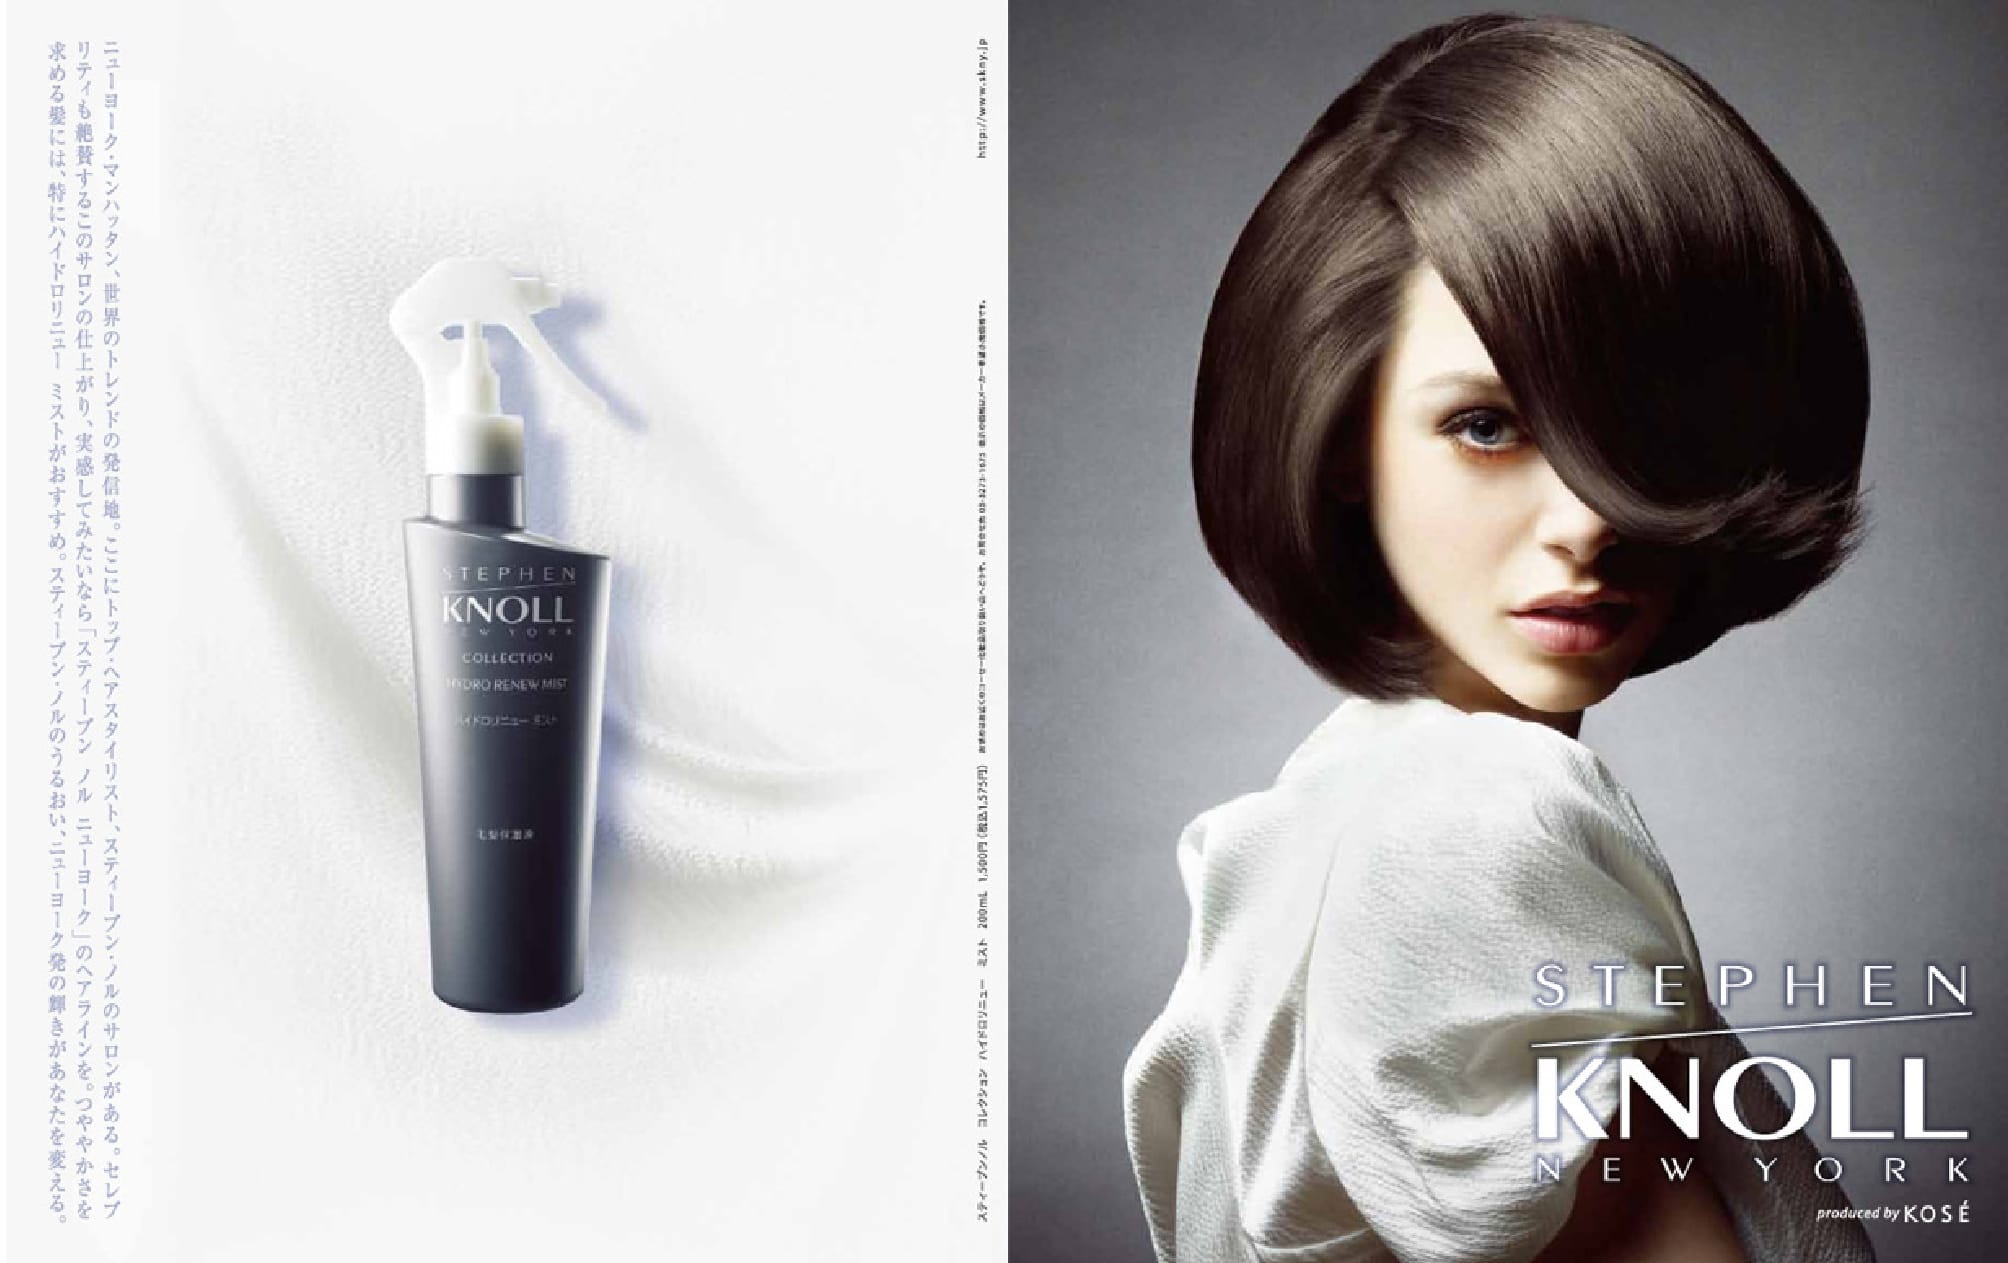 STEPHEN KNOLL NEW YORK (Hair Care) Advertisement /Branding ヘアスタイリスト : スティーブンノル、クリエイティブディレクター : 官浪辰夫